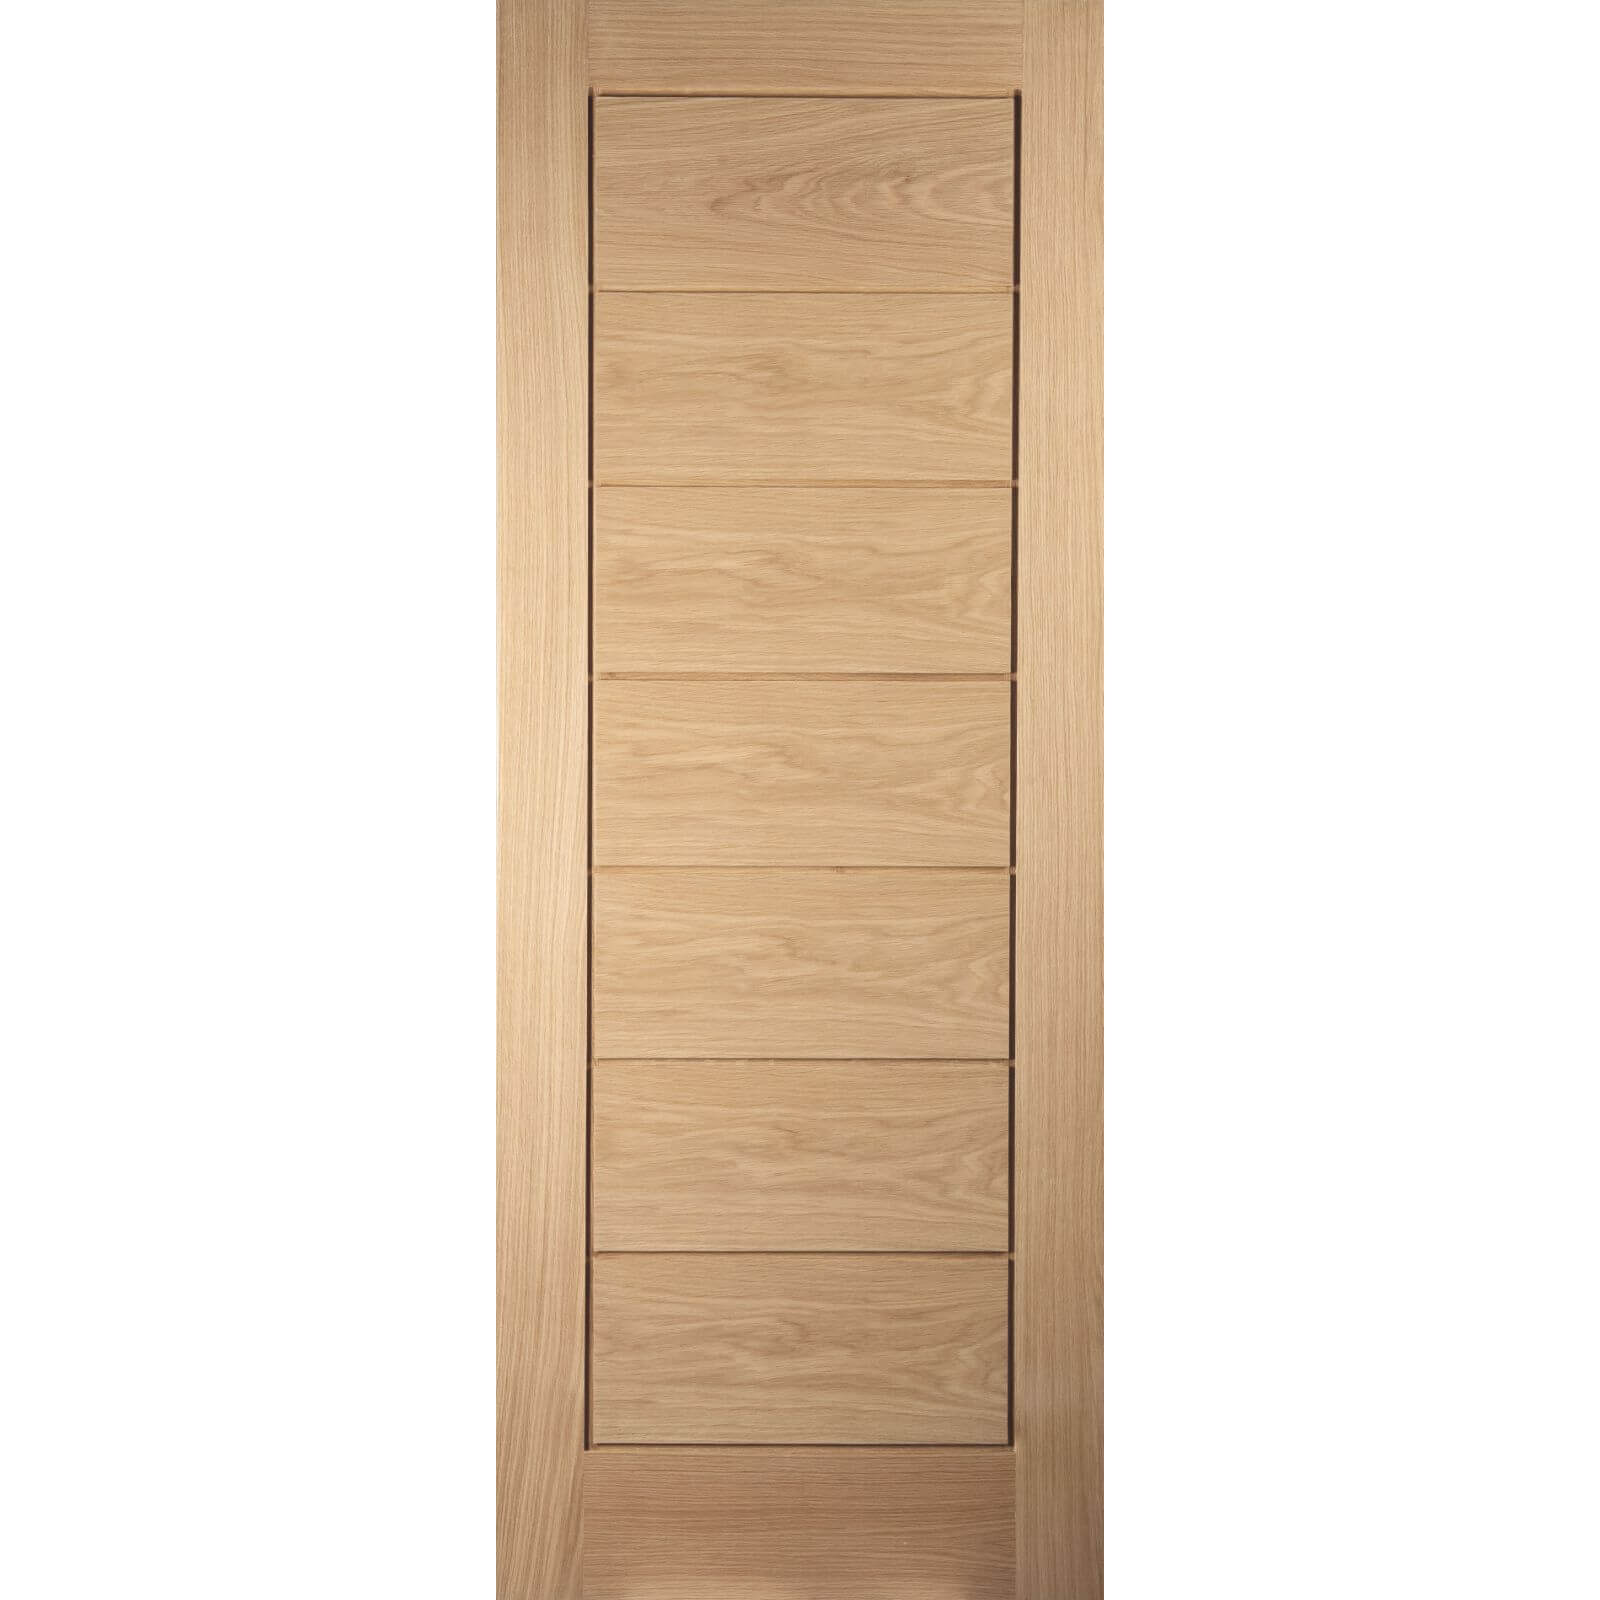 Photo of Horizontal 7 Panel White Oak Veneer Internal Door - 686mm Wide